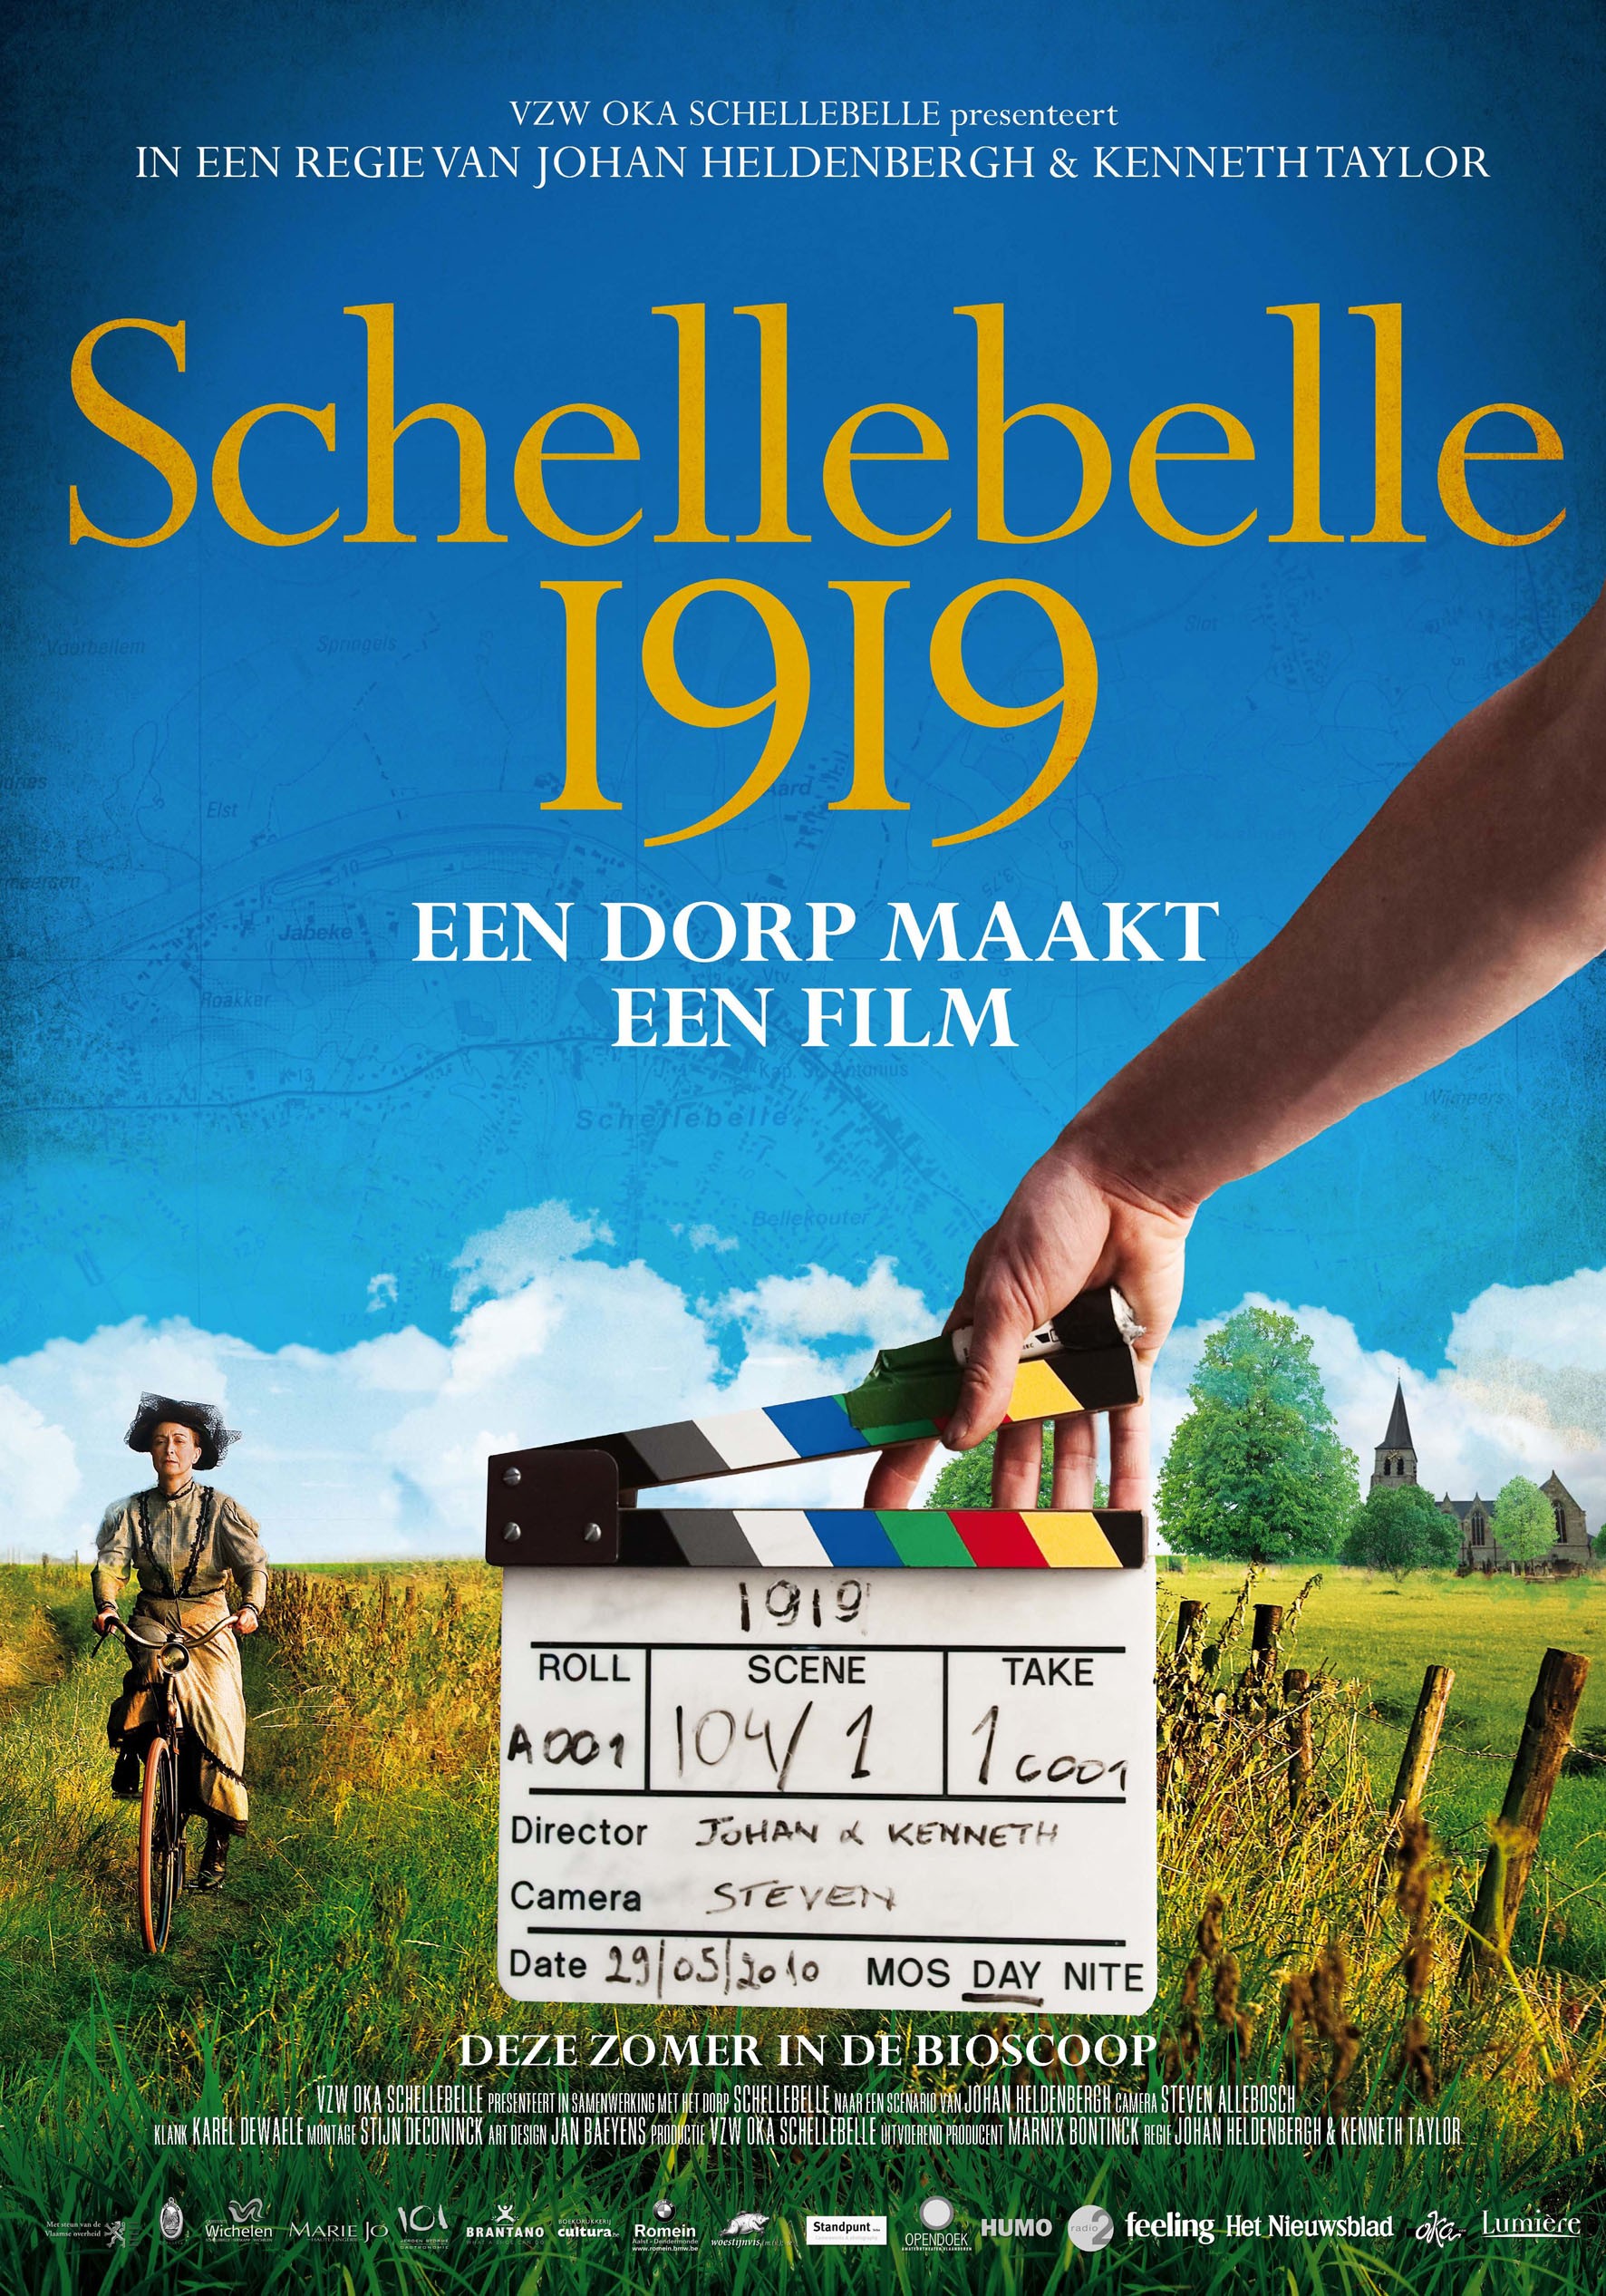 Mega Sized Movie Poster Image for Schellebelle 1919 